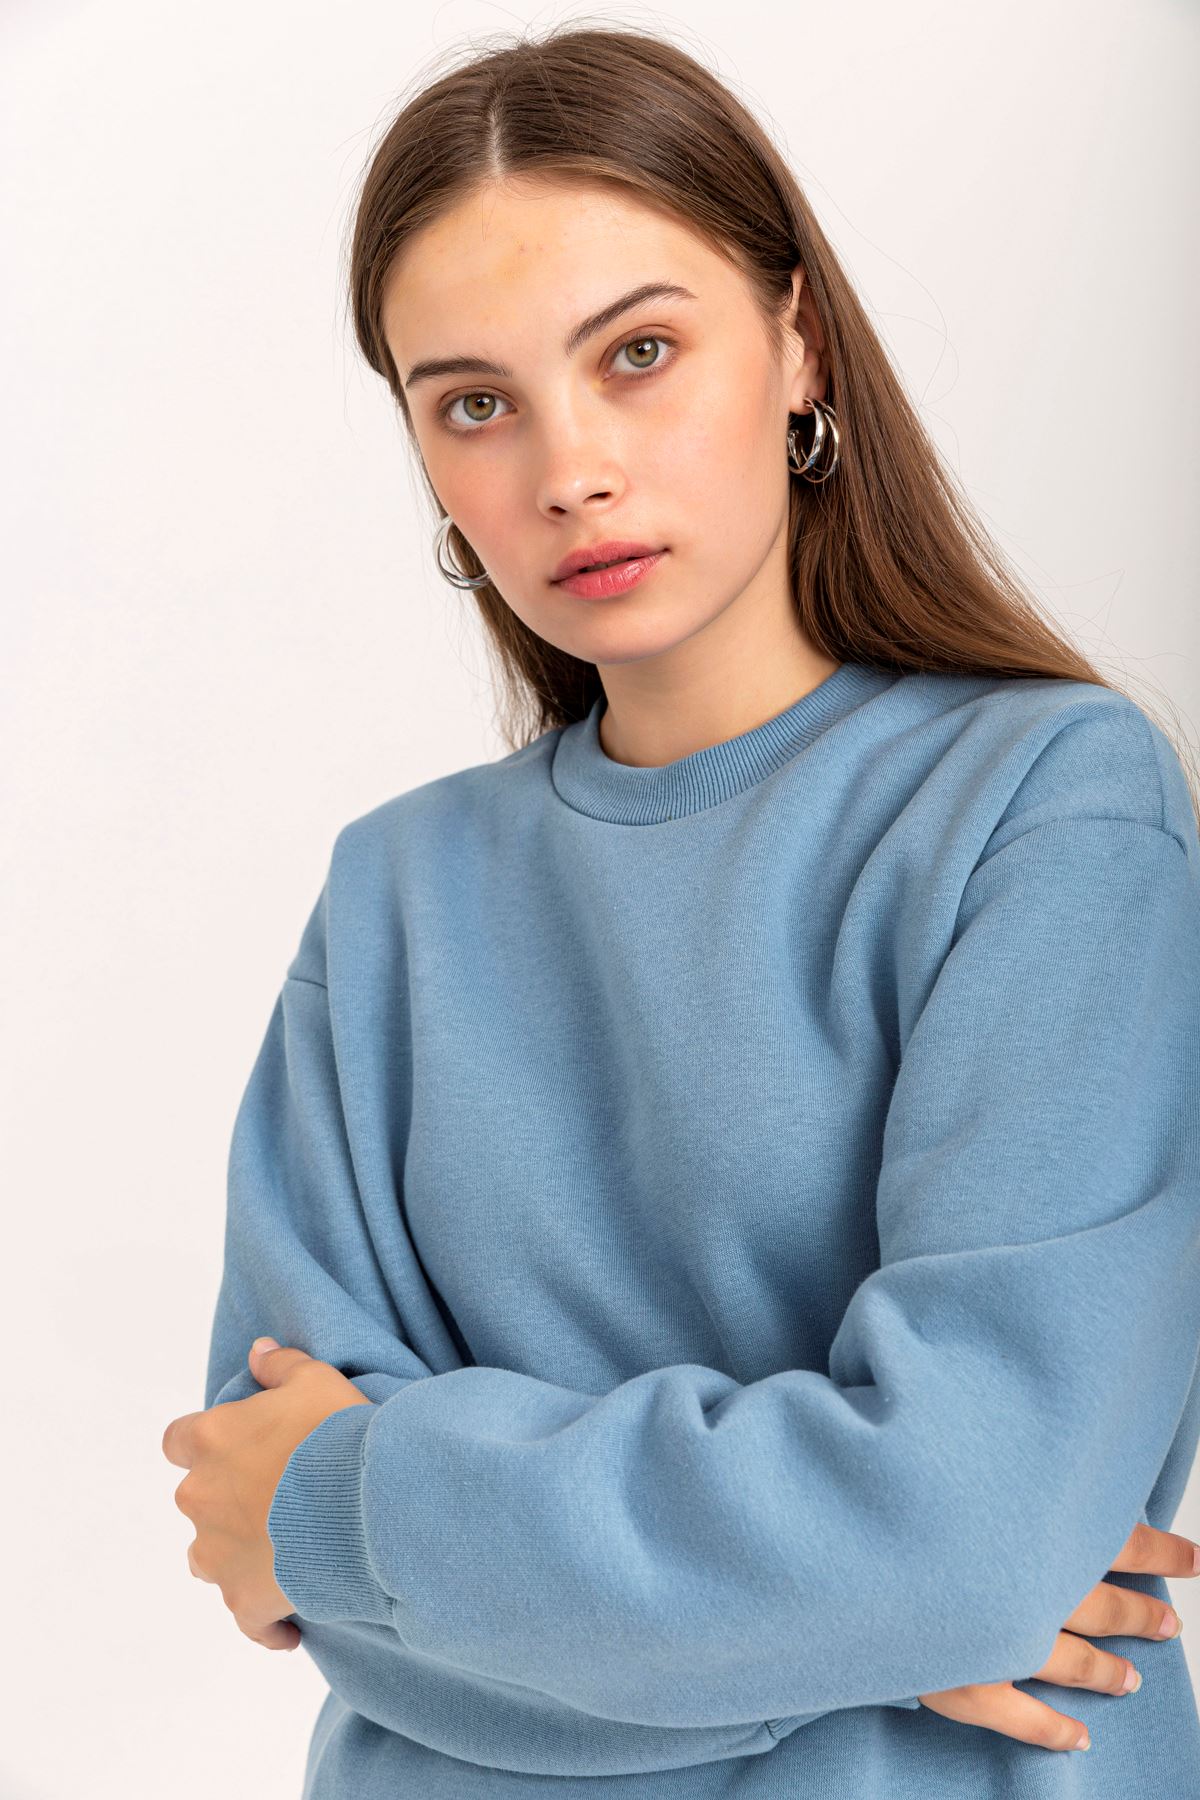 Third Knit With Wool İnside Fabric Long Sleeve Below Hip Women Sweatshirt - Light Blue